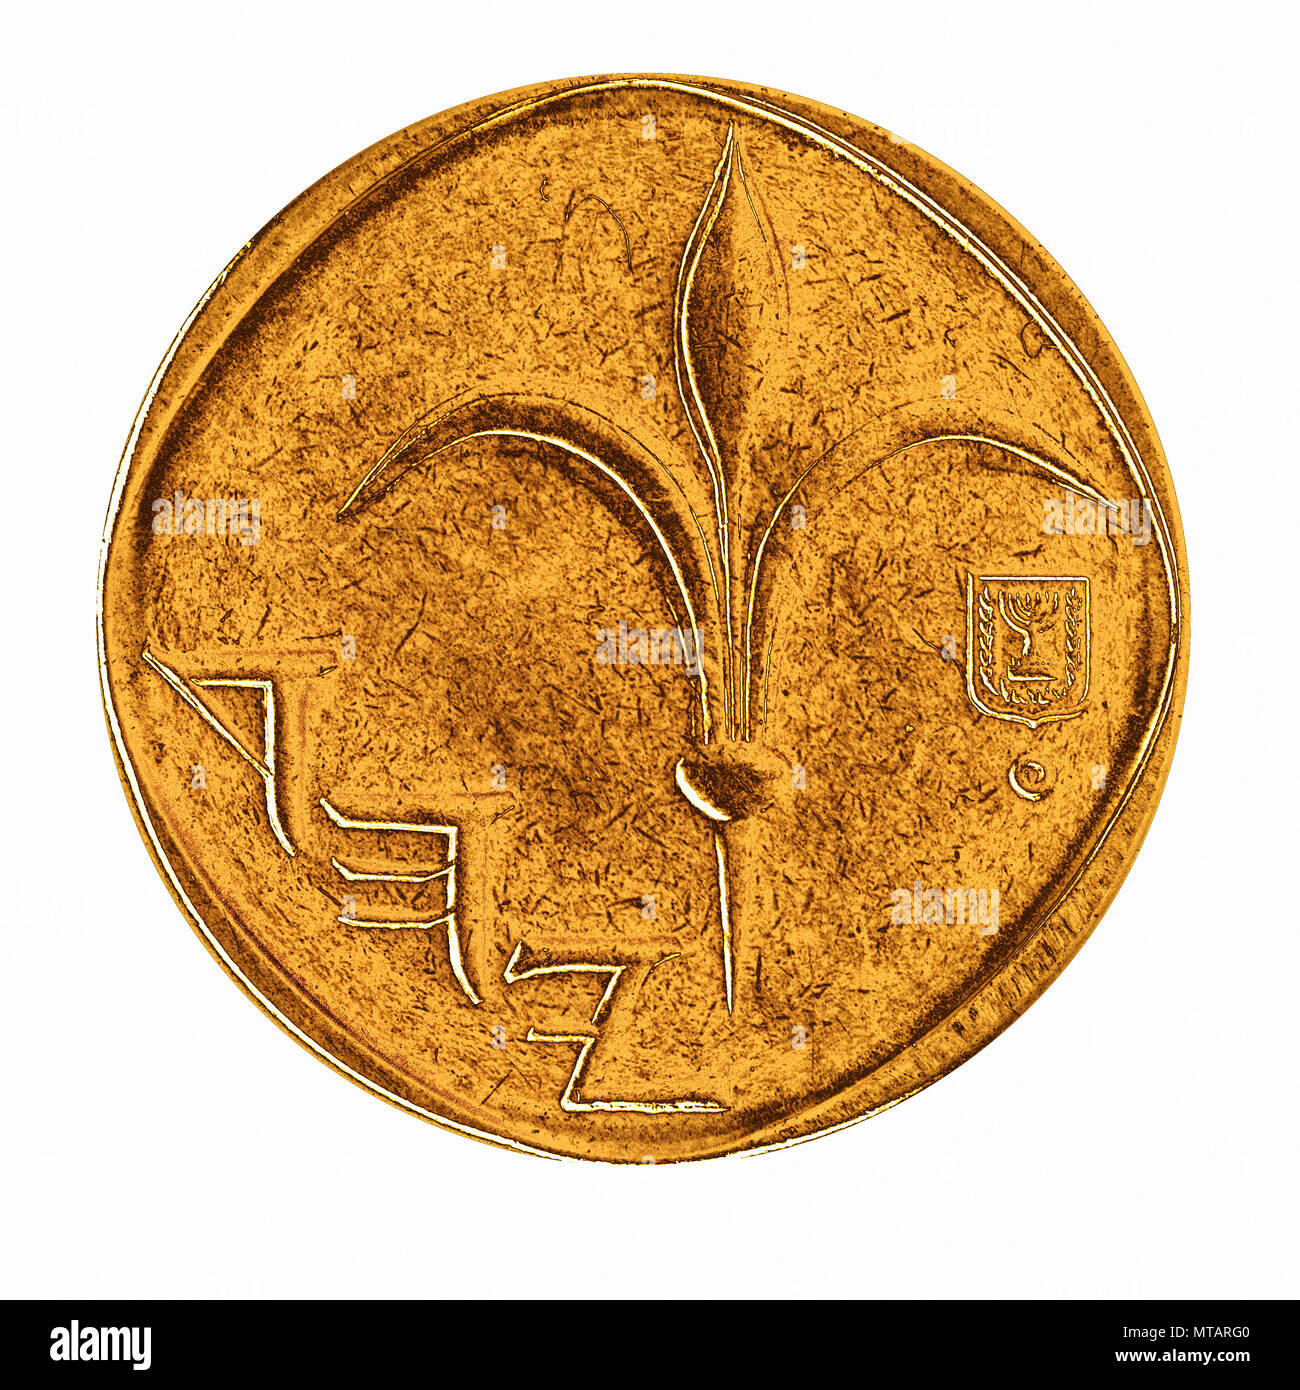 Digitally enhanced image pf a One New Israeli Shekel coin (ILS or NIS) Stock Photo